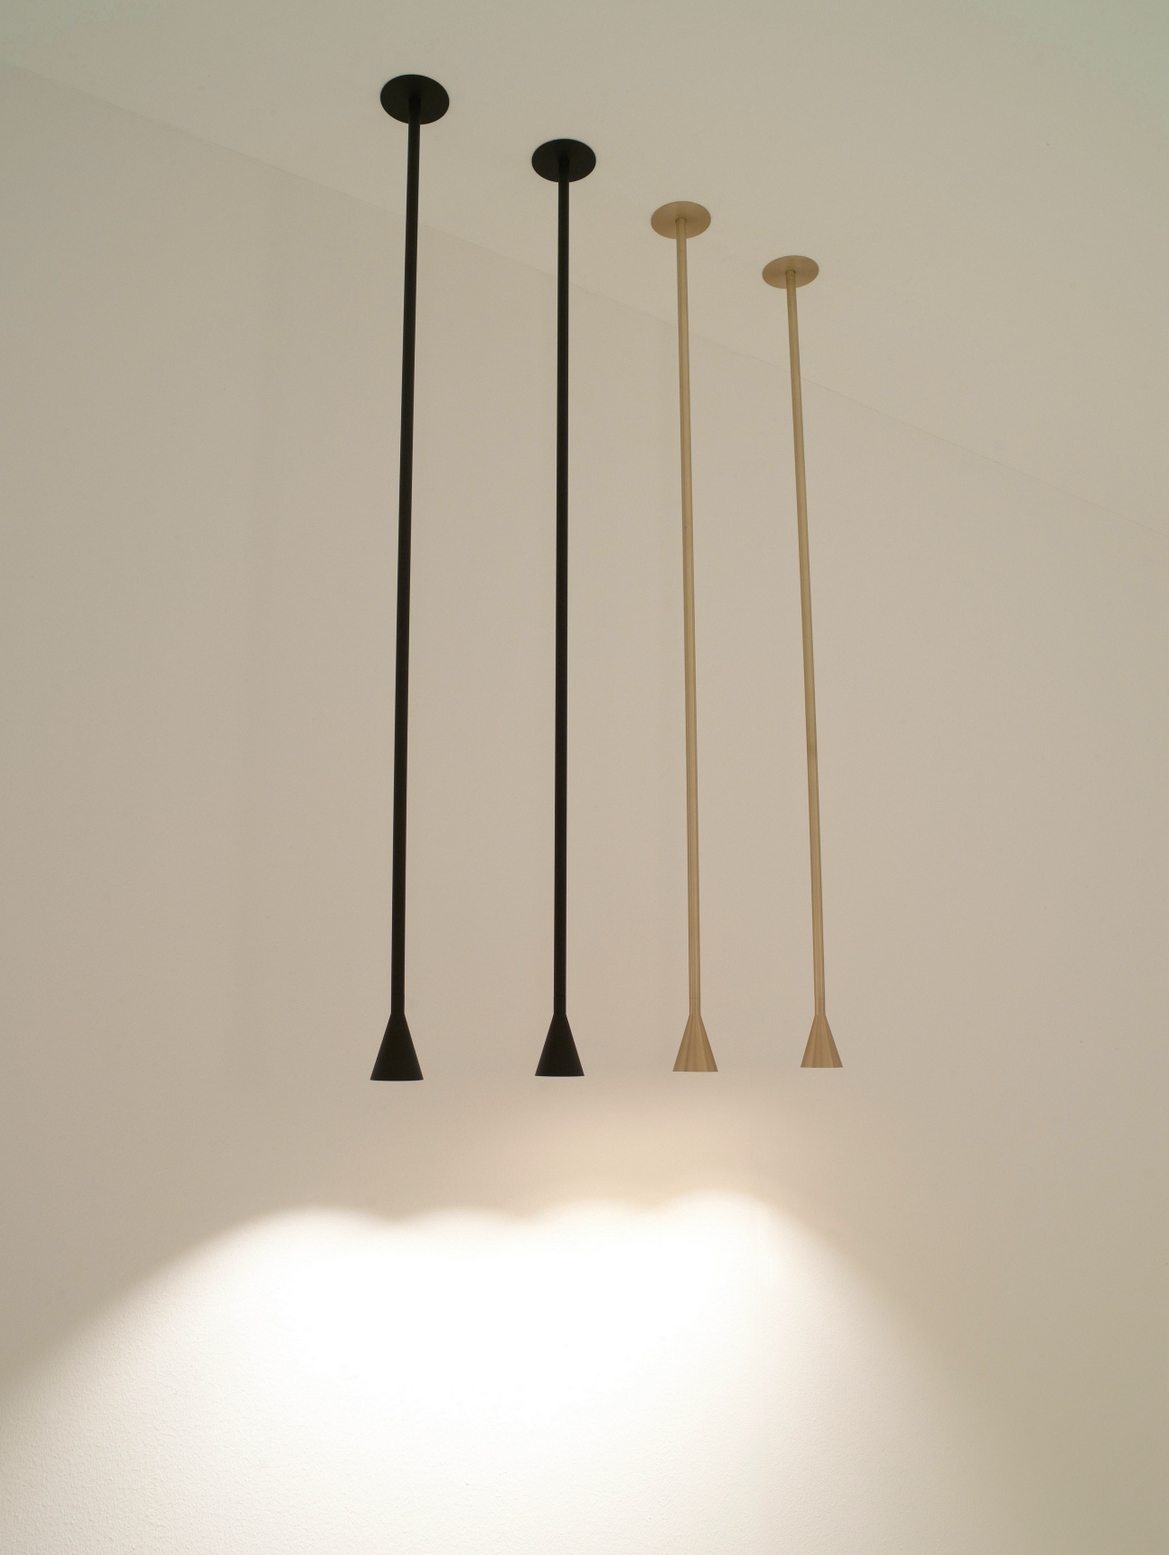 Austere Lamp by Hans Verstuyft for Trizio21